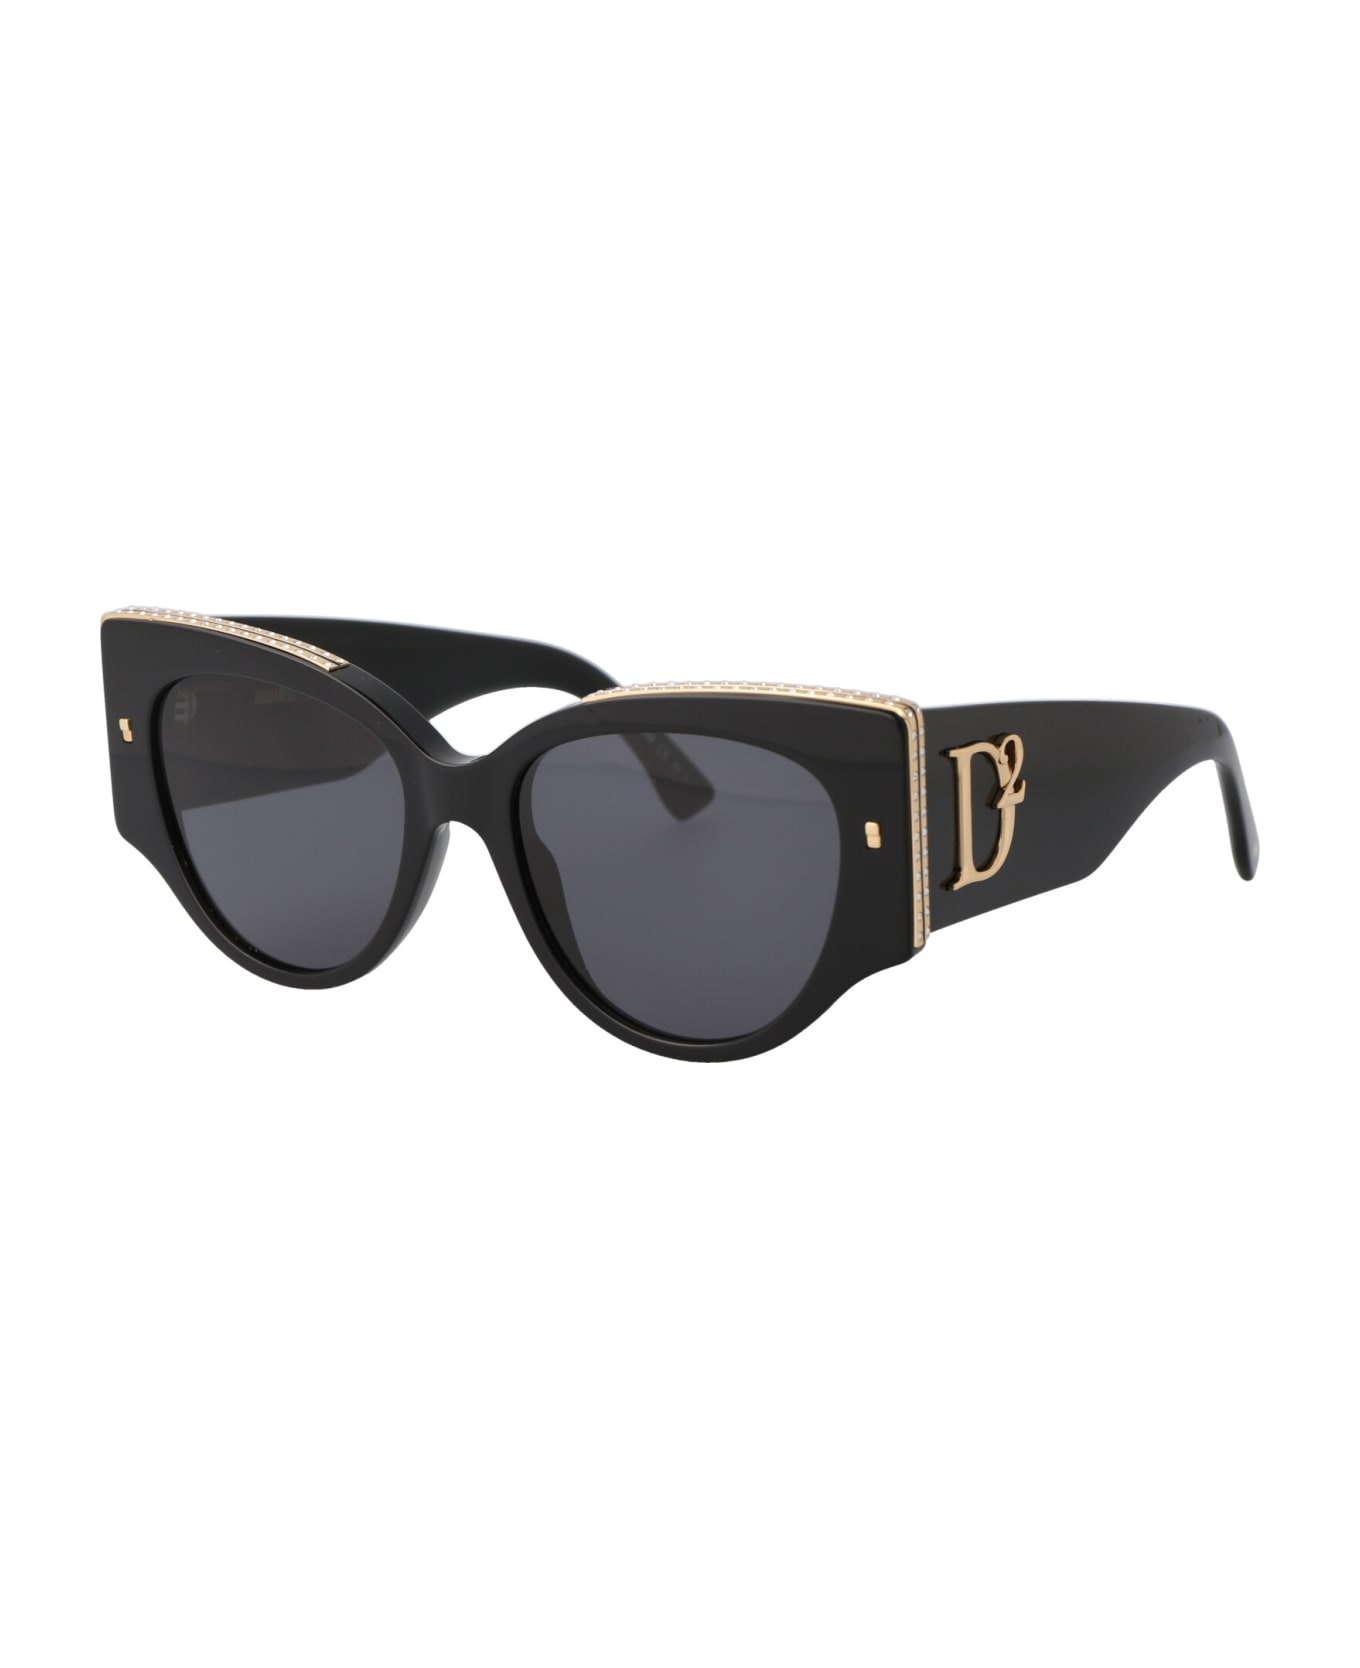 Dsquared2 Eyewear D2 0032/s Sunglasses - 2Feathers and Retro Sunglasses to Valerian Paris Premiere